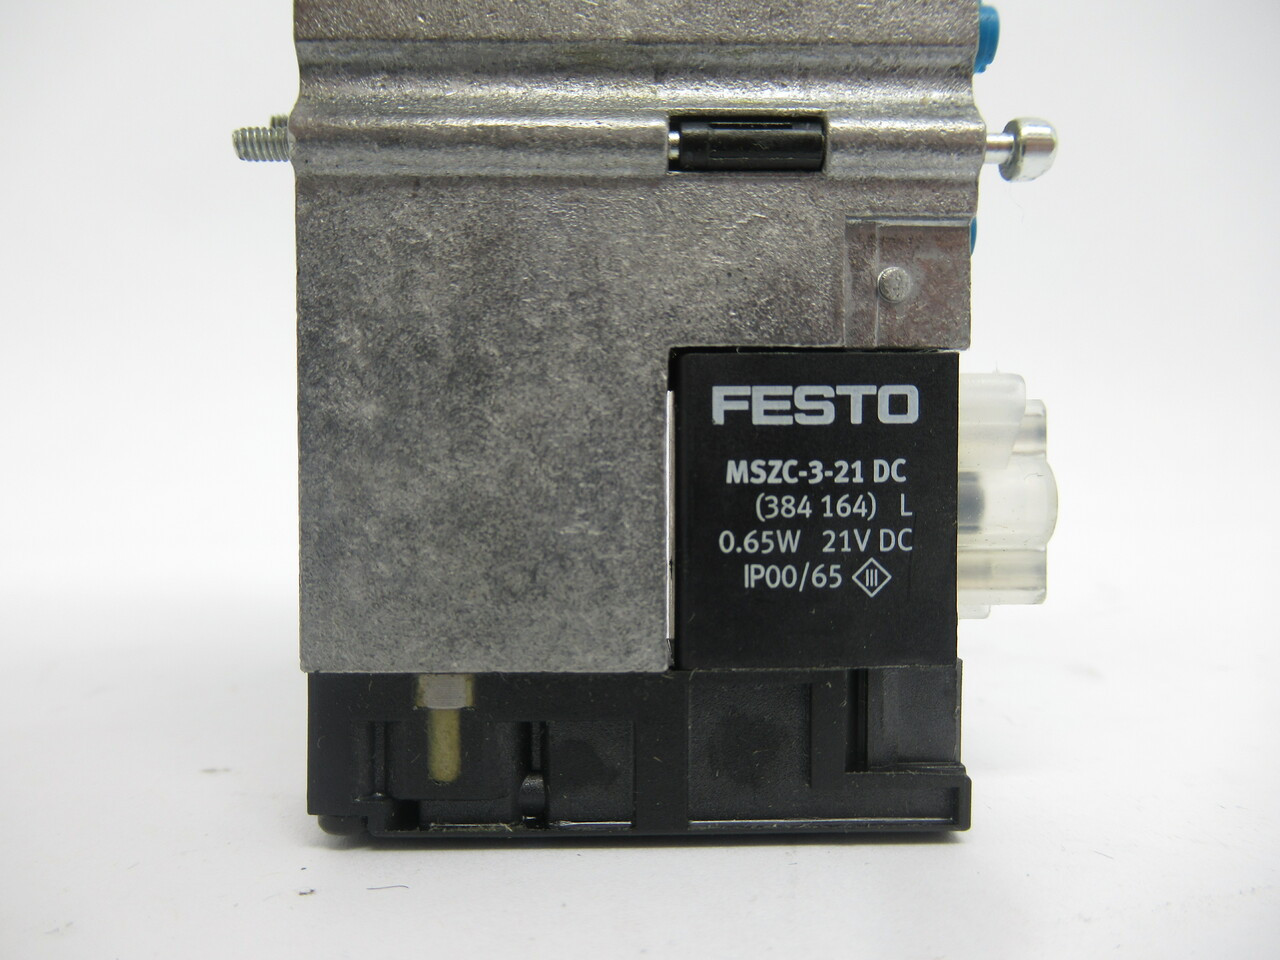 Festo 173452 CPA10-M1H-2X3-GLS Single Solenoid Valve 2x 3/2 Way N.C 21VDC NEW